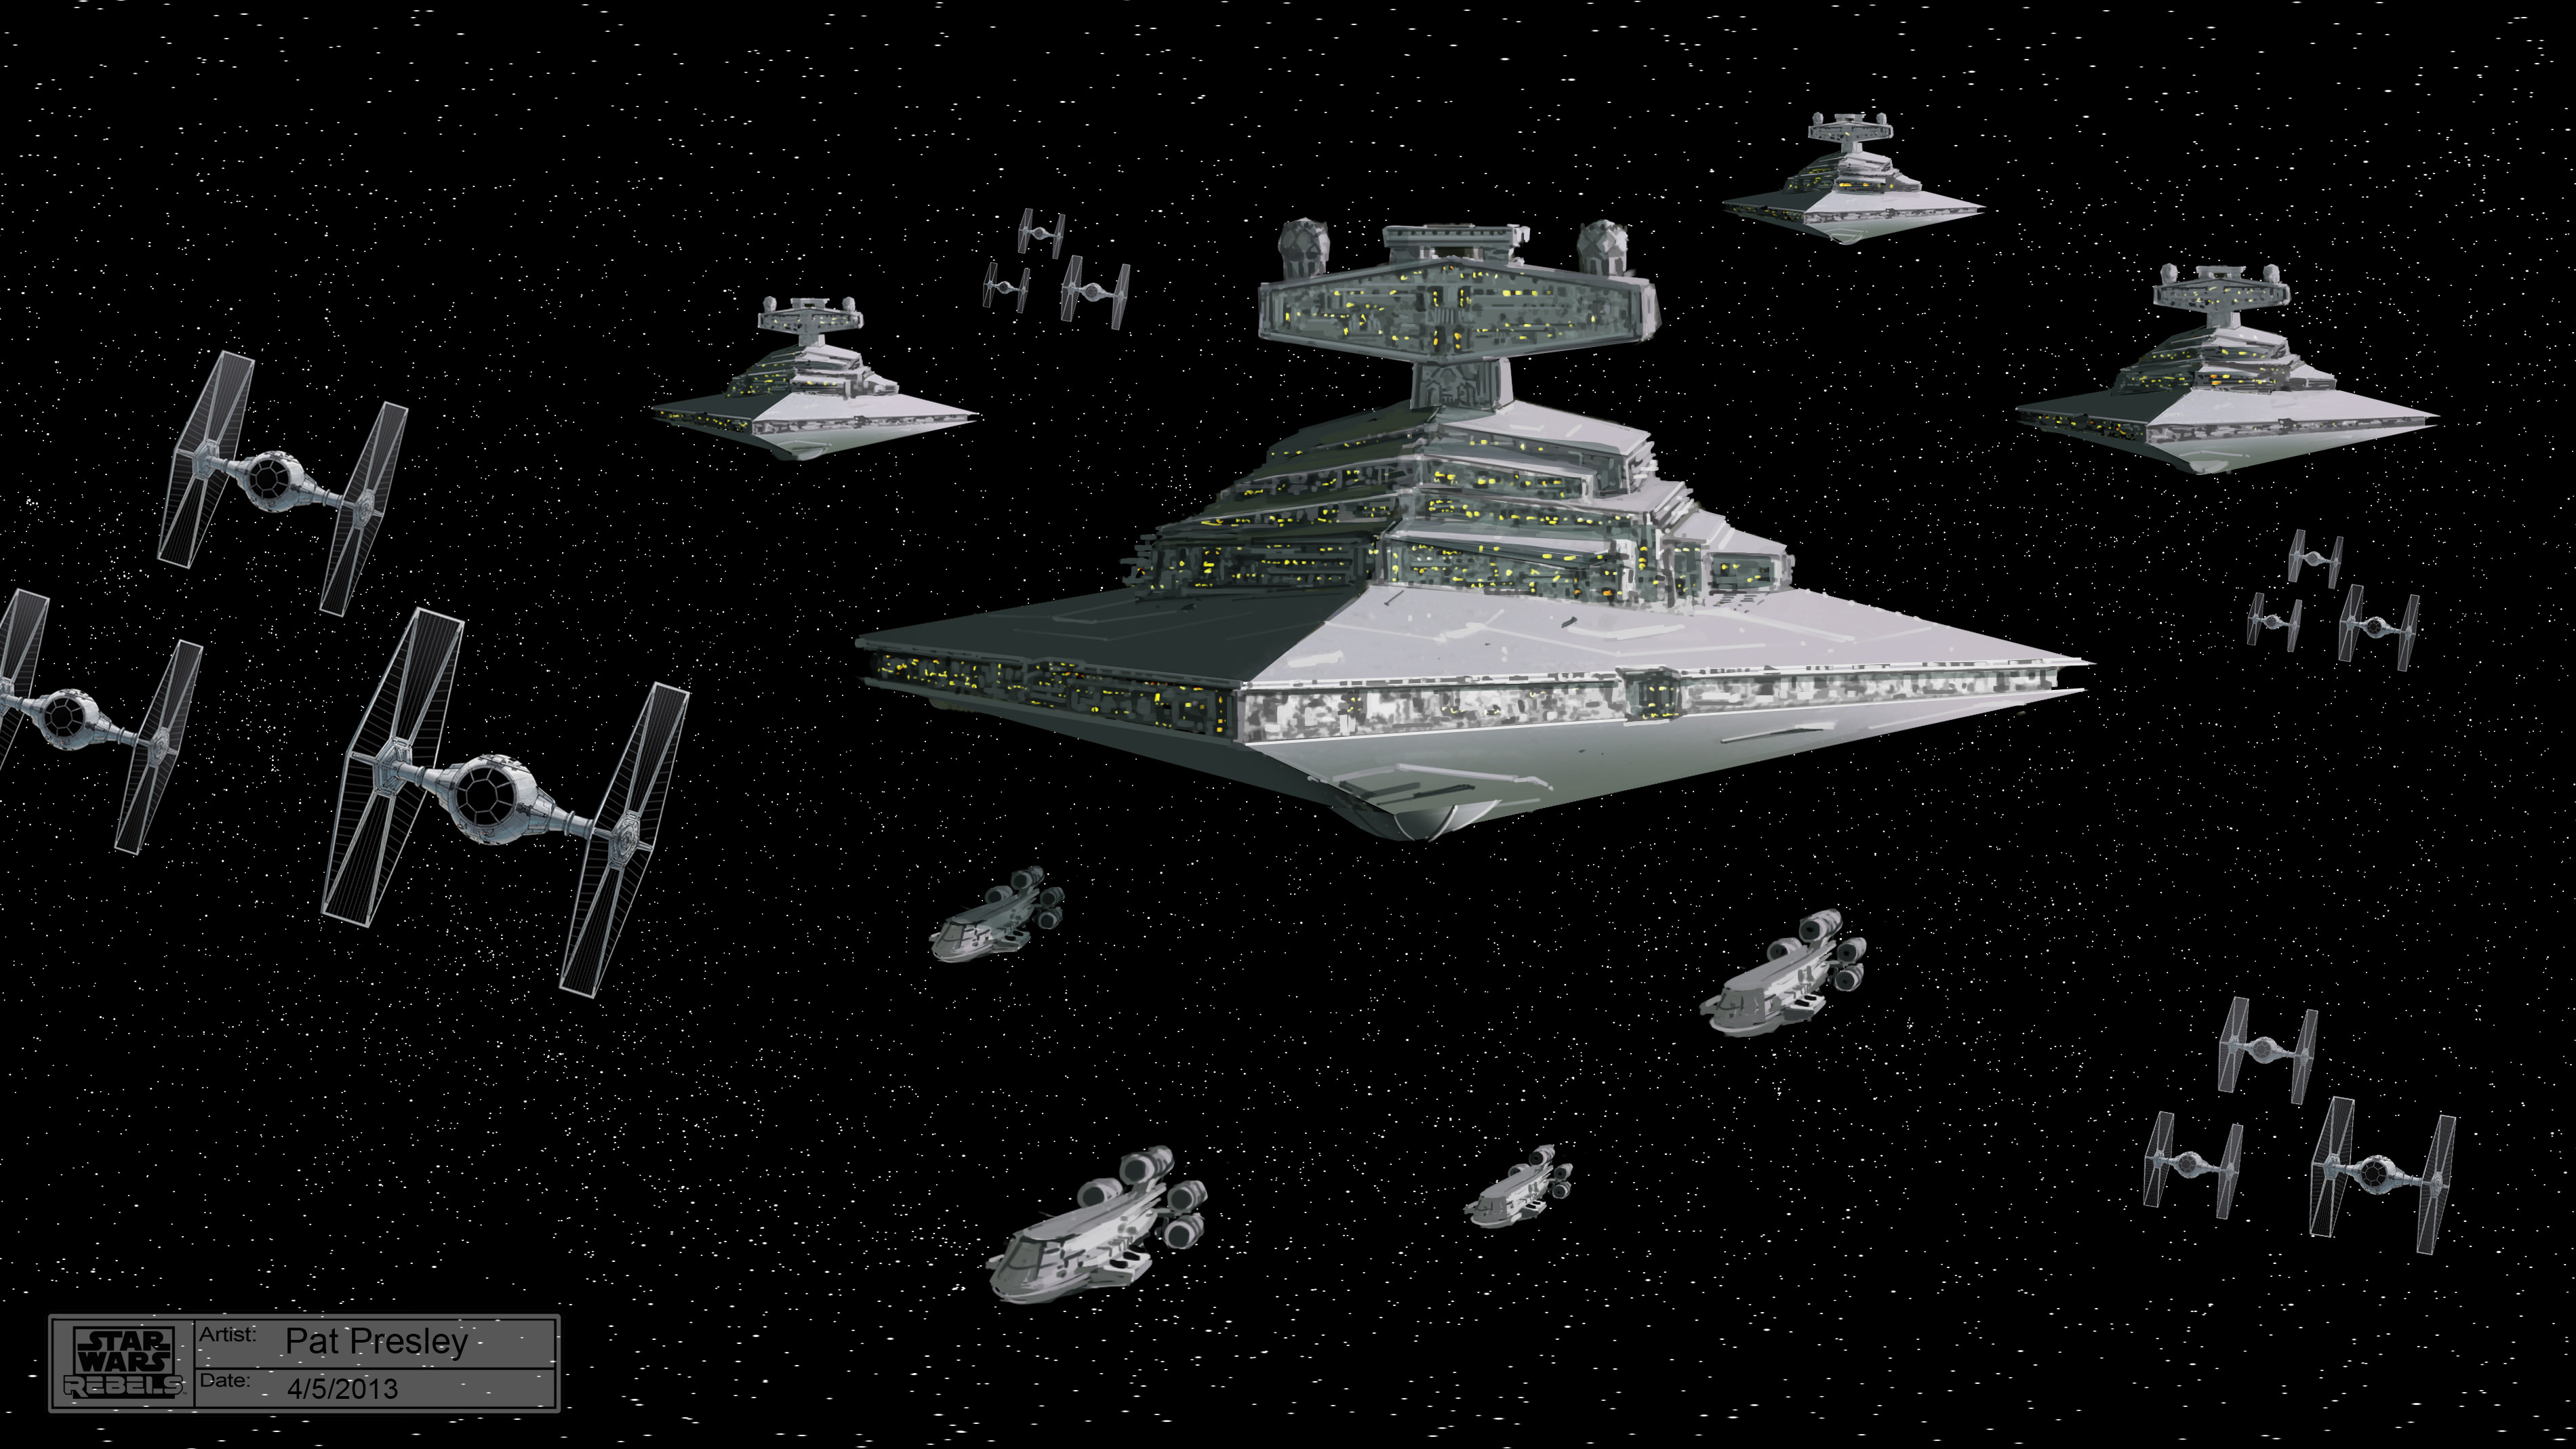 3800x2138 <b>Star Wars Rebel Fleet</b> Pictures to Pin on Pinterest